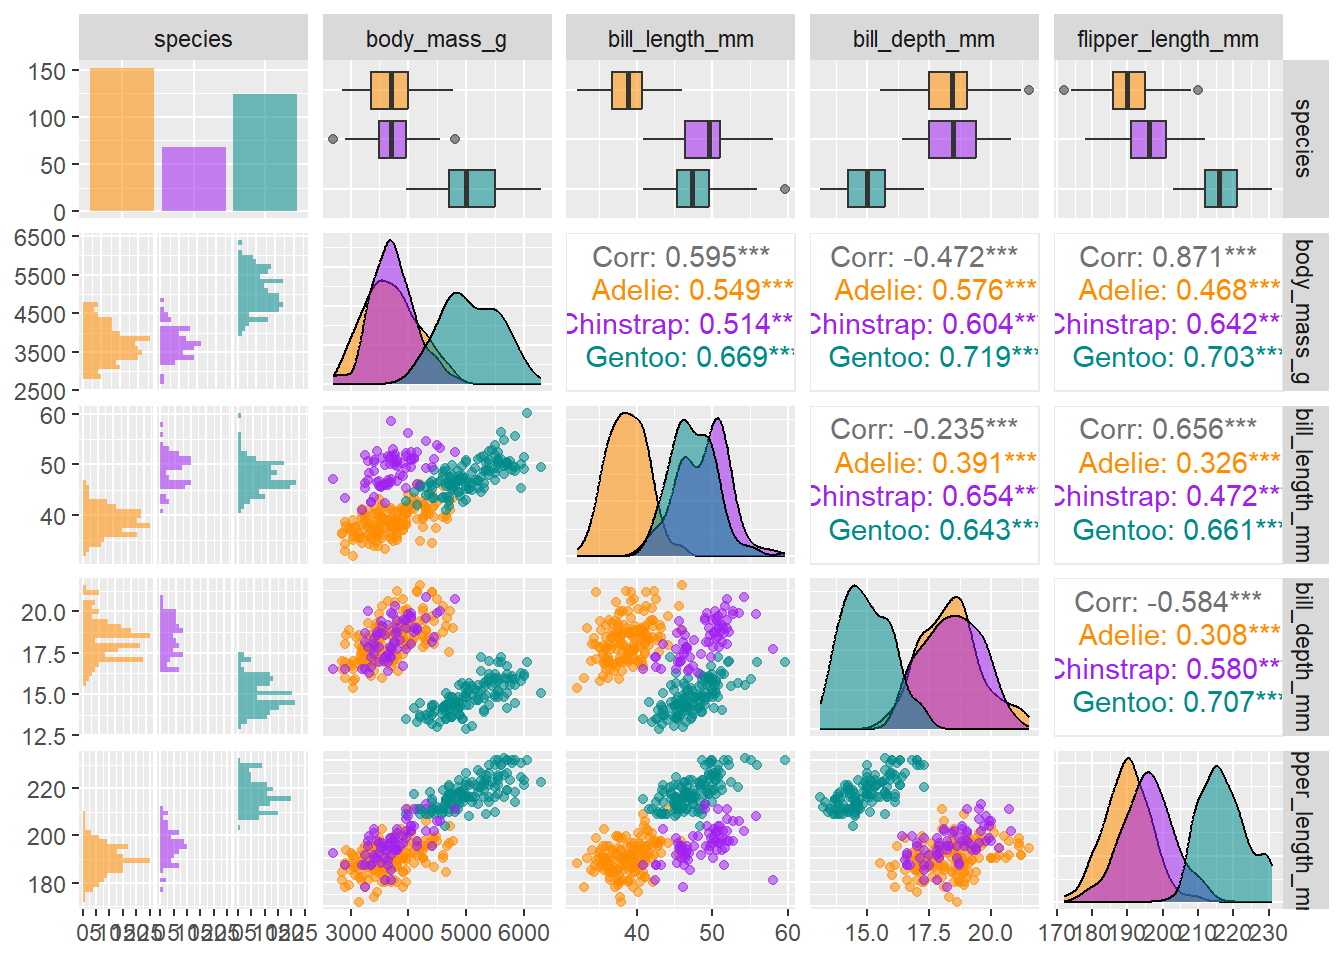 Enhanced GGally pairs plot for palmerpenguin data